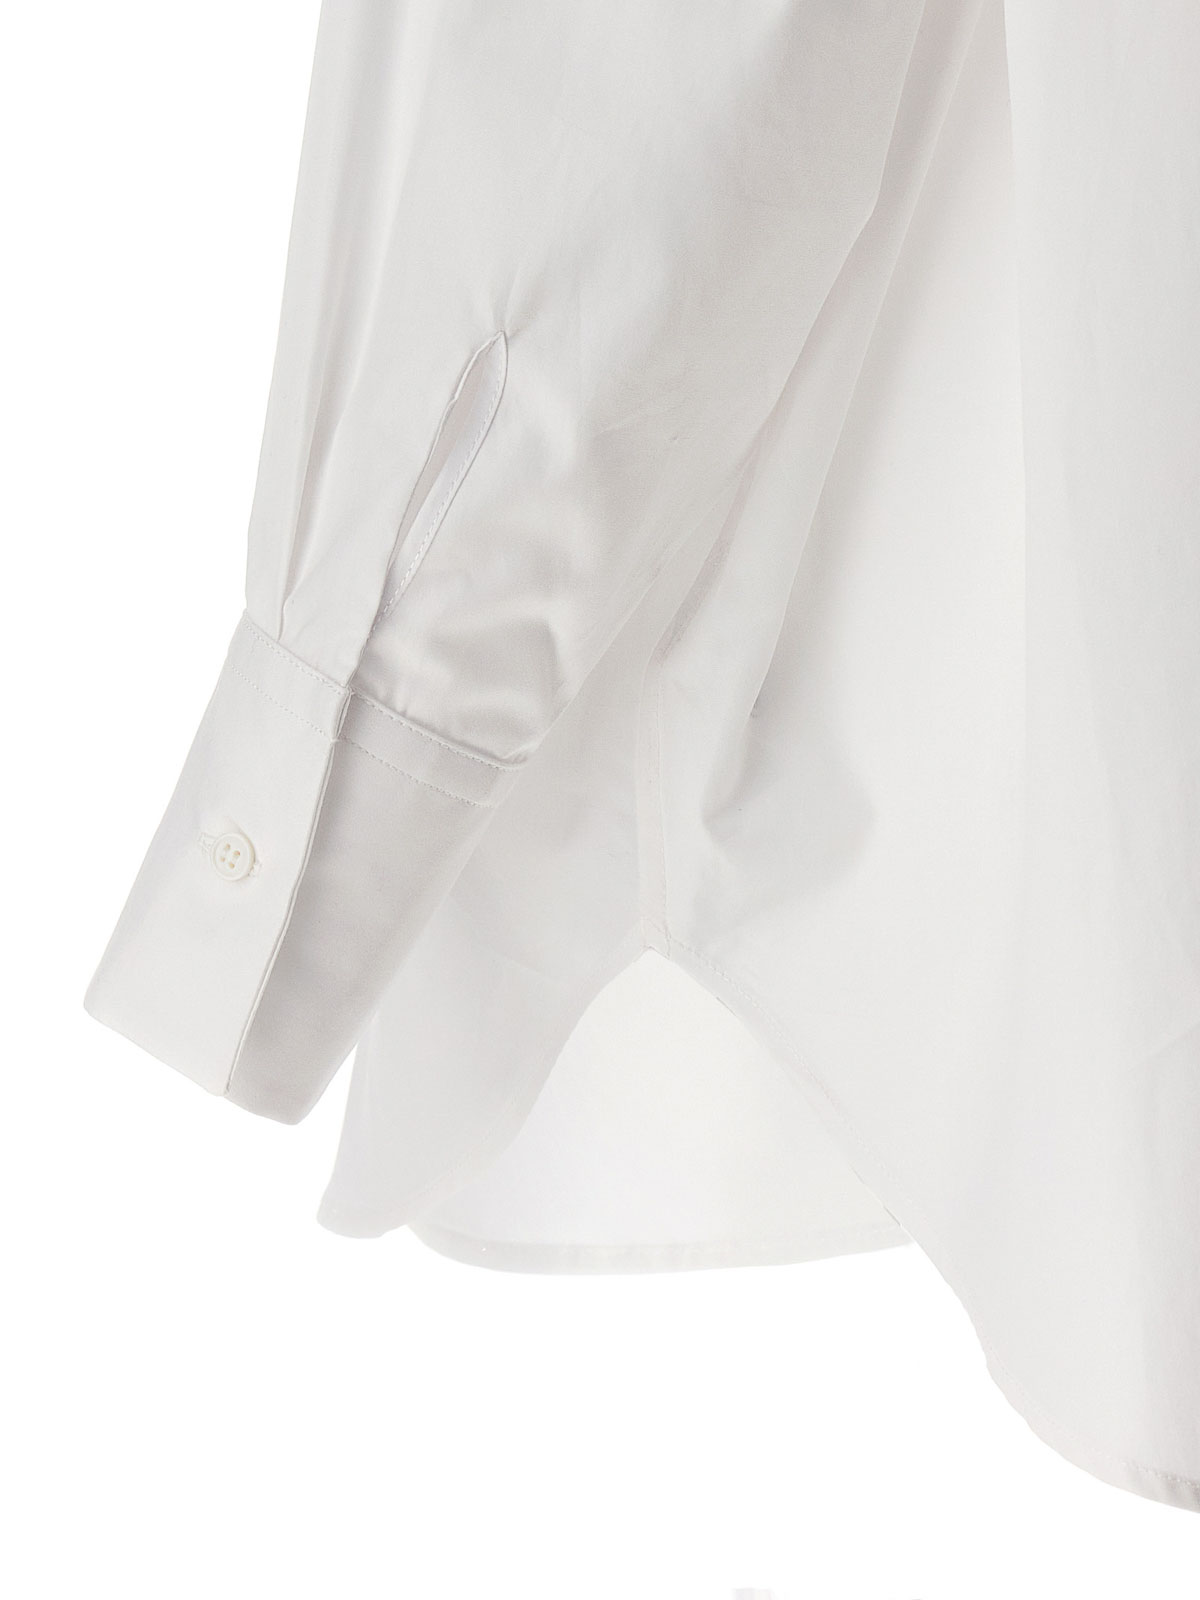 Shop Ermanno Scervino Rhinestone Embroidery Shirt In Blanco